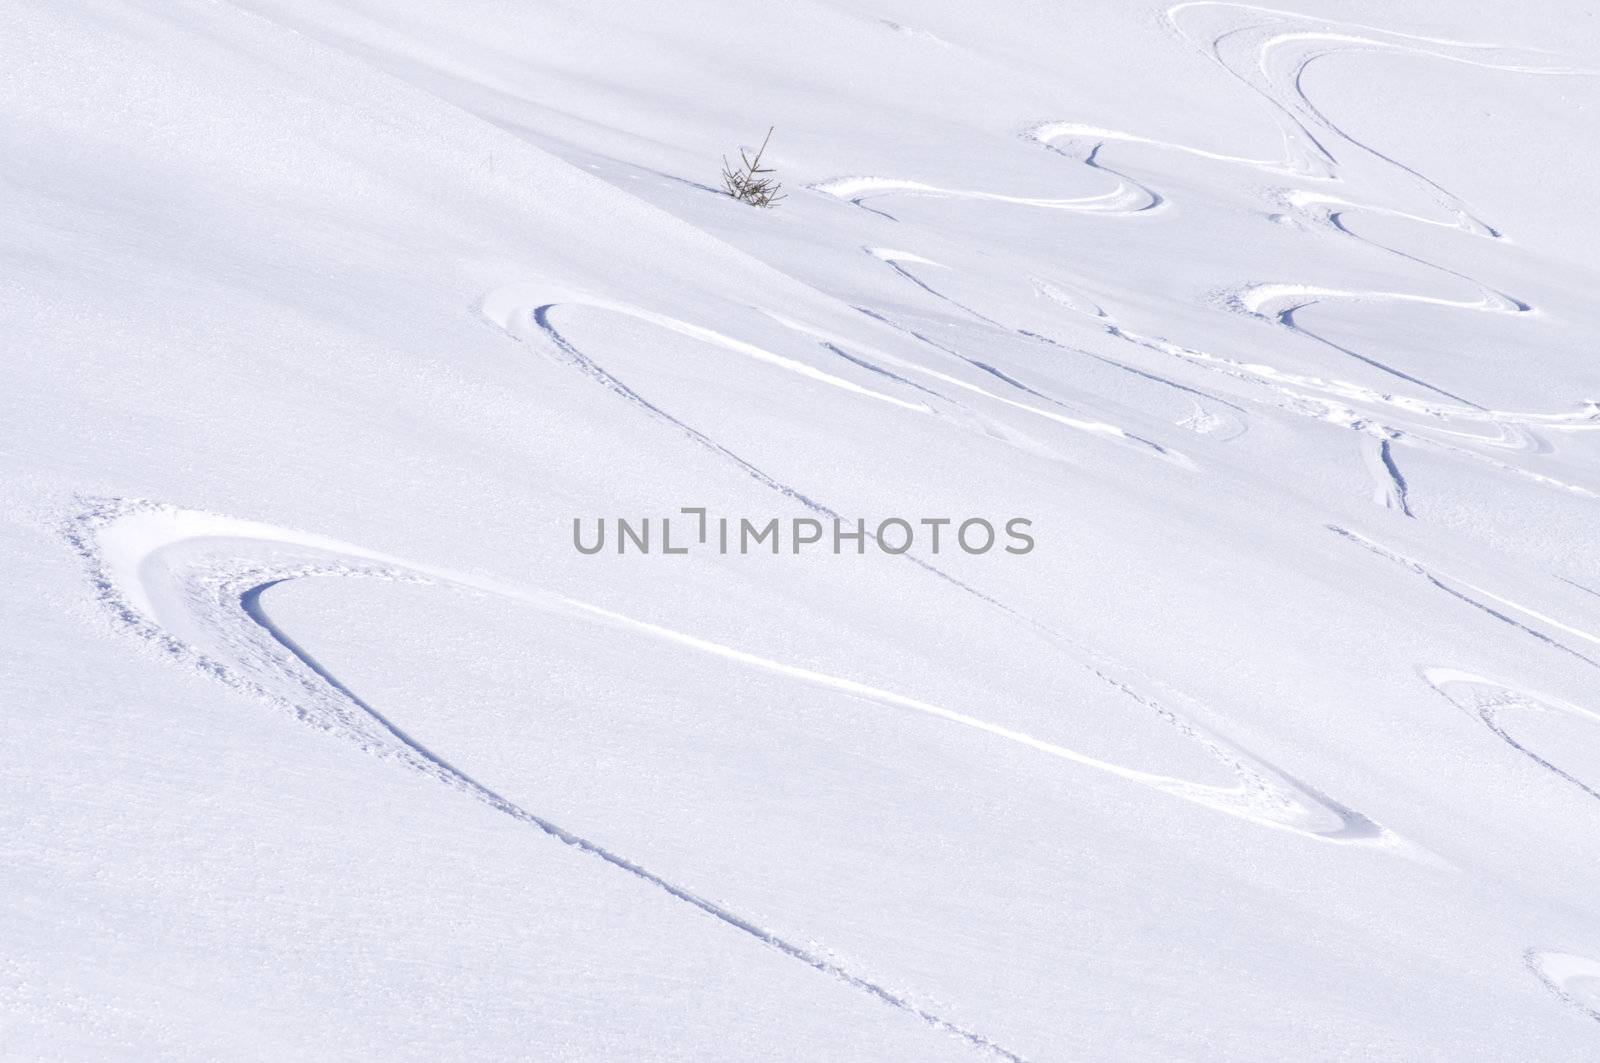 freeride tracks on powder snow by Rainman